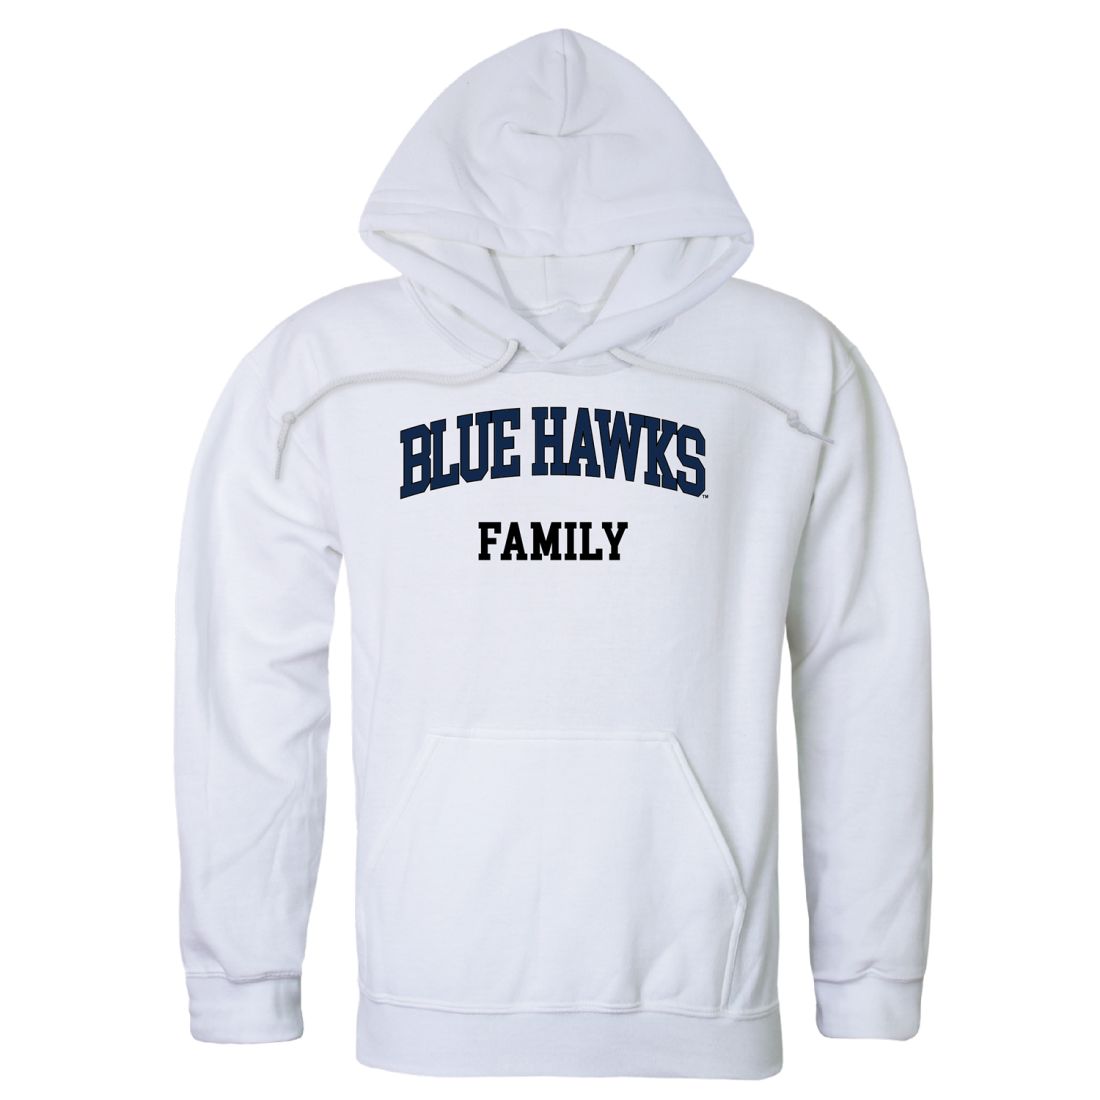 Dickinson State University Blue Hawks Family Hoodie Sweatshirts